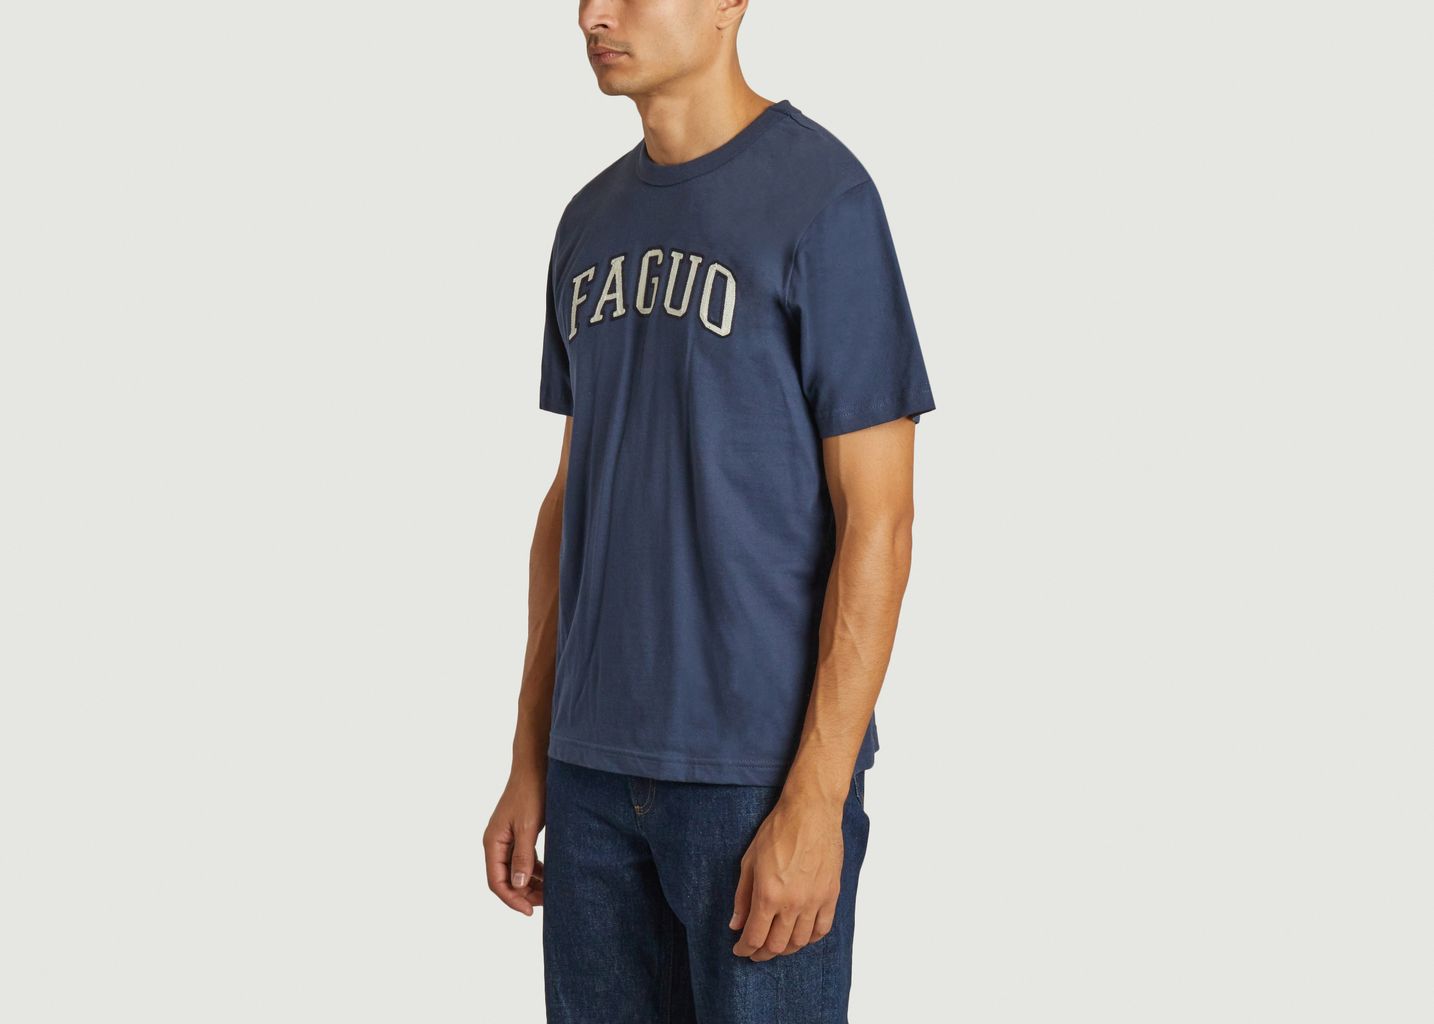 T-shirt Lugny  - Faguo